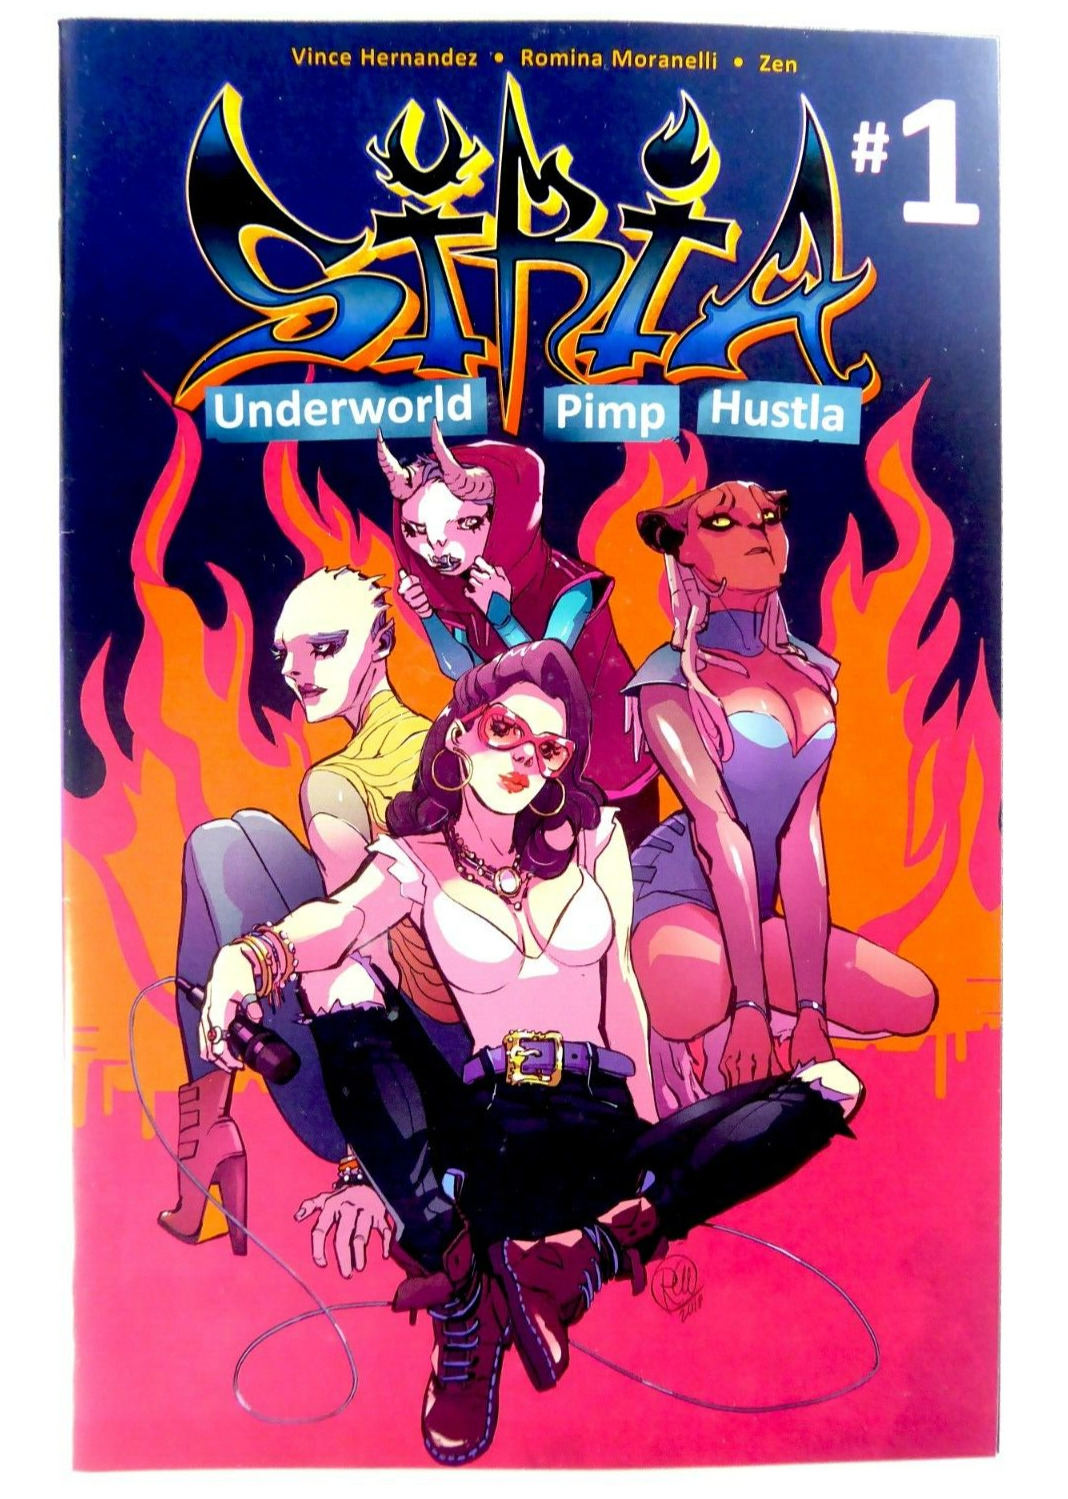 Primetime Comics SIRIA UNDERWORLD PIMP HUSTLA (2019) #1 NM- (9.2) Ships FREE